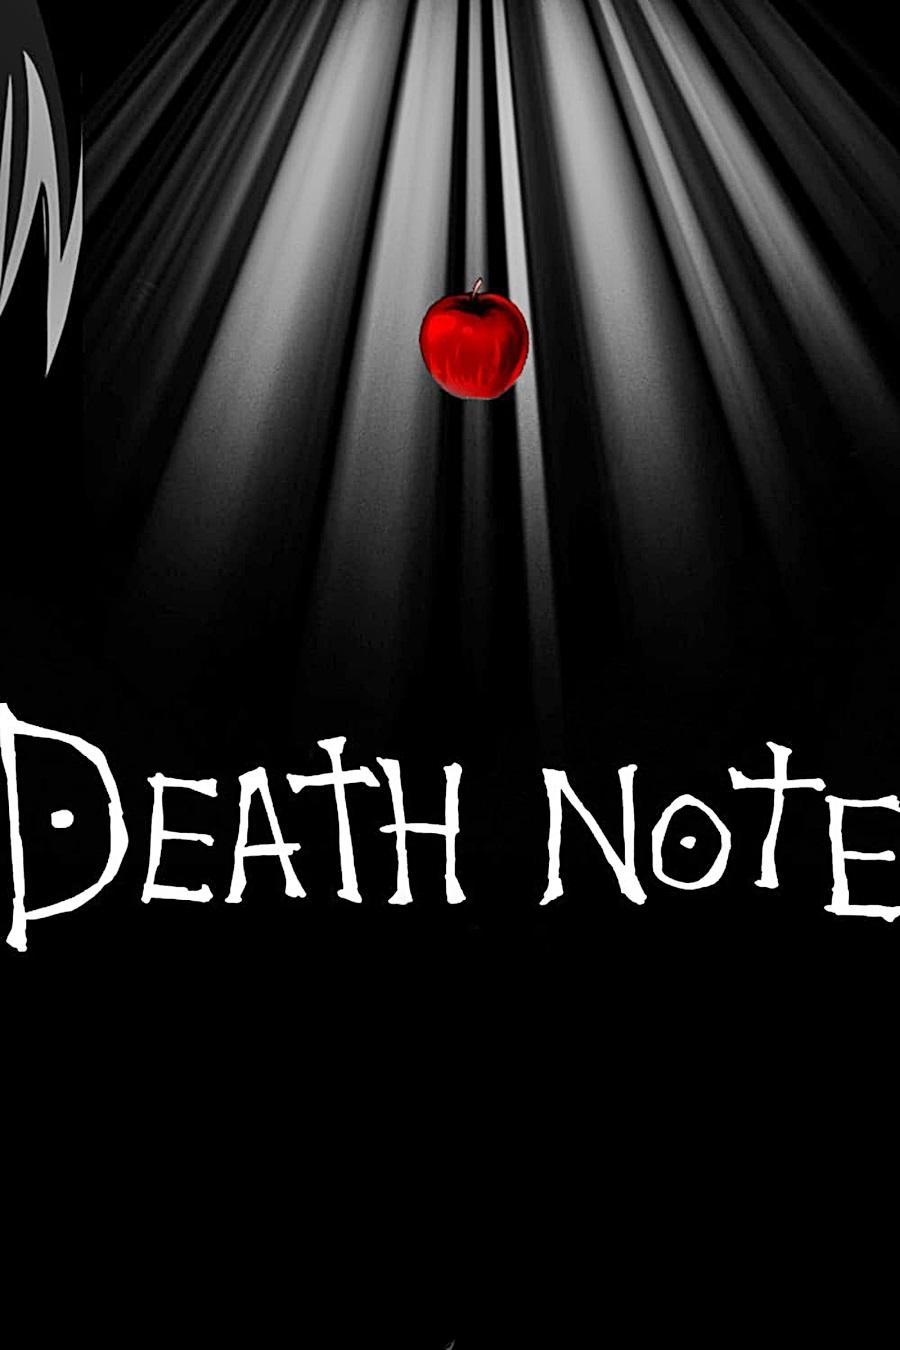 40 Gambar Wallpaper Hd Android Death Note terbaru 2020